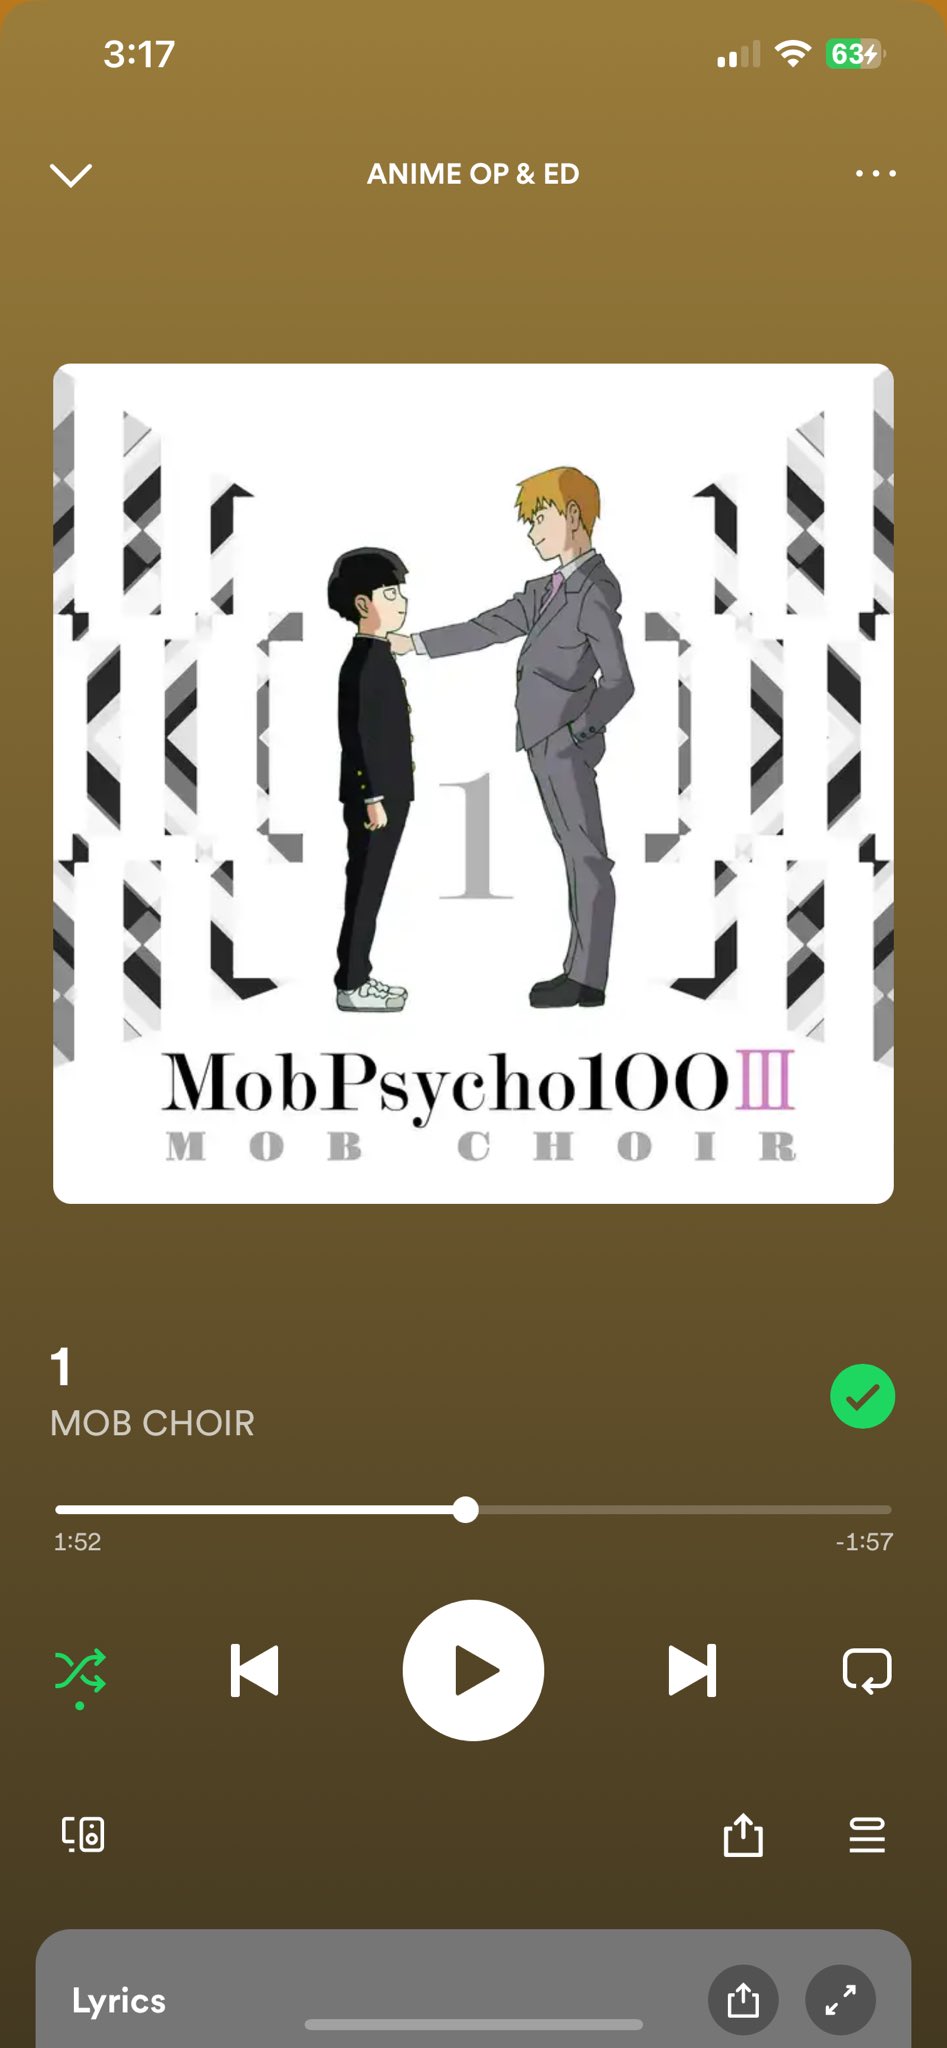 MOB CHOIR — 1 (Mob Psycho 100 III OP) — Anime Liryca